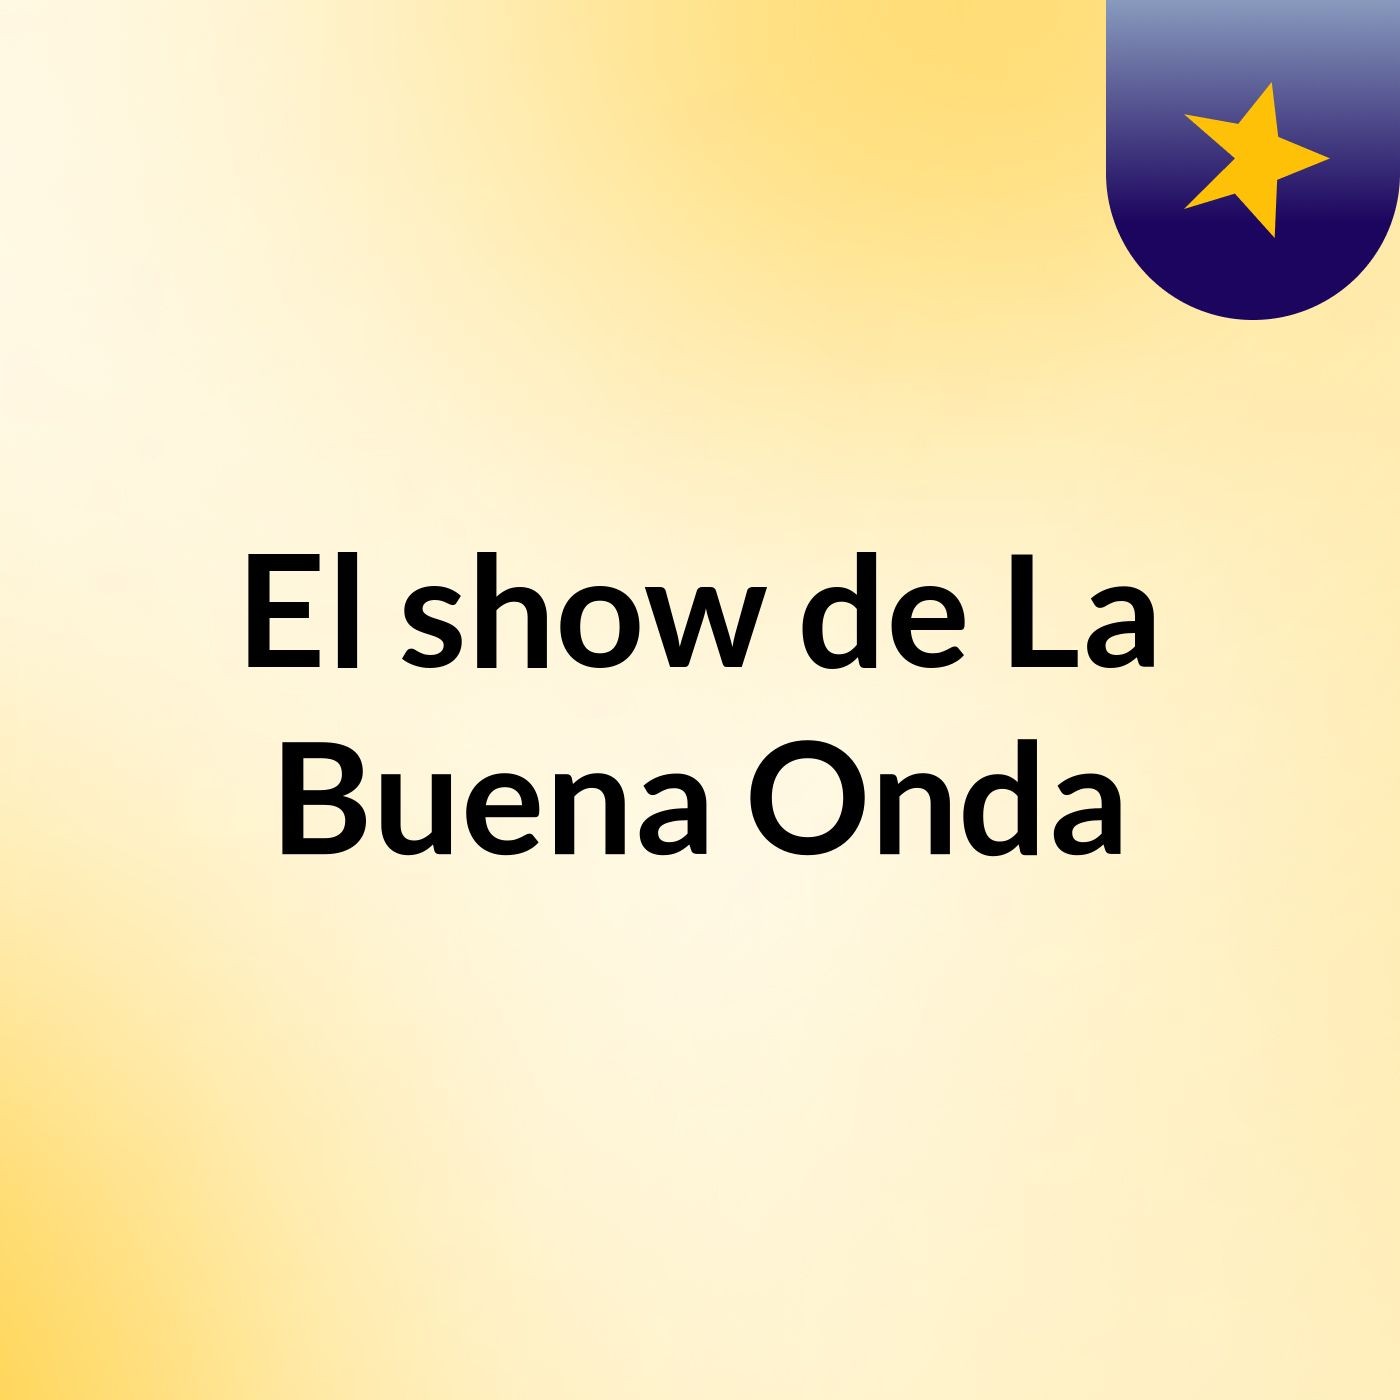 El show de La Buena Onda